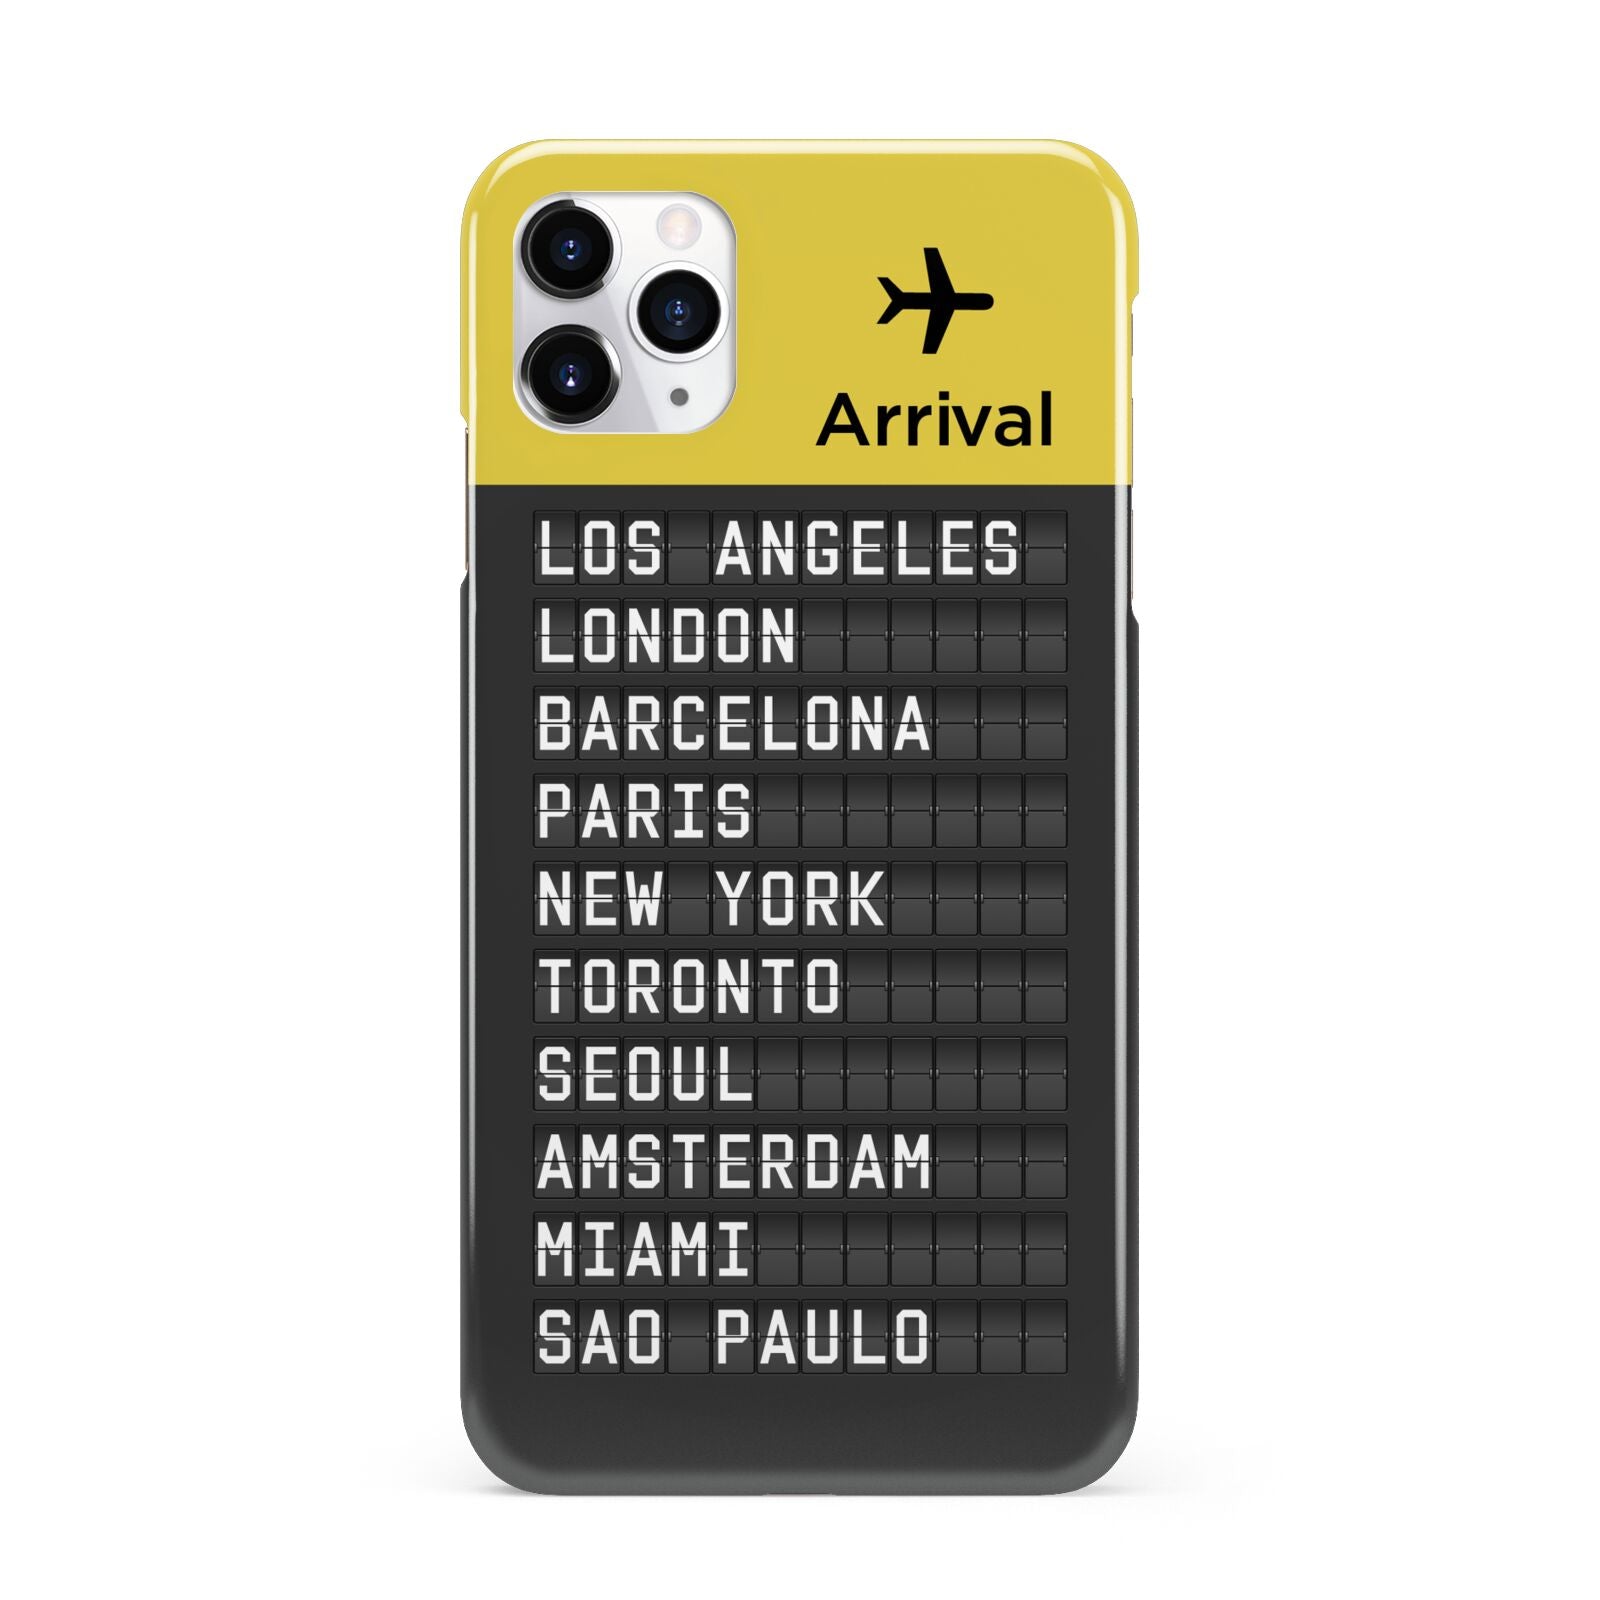 Airport Arrivals Board iPhone 11 Pro Max 3D Snap Case